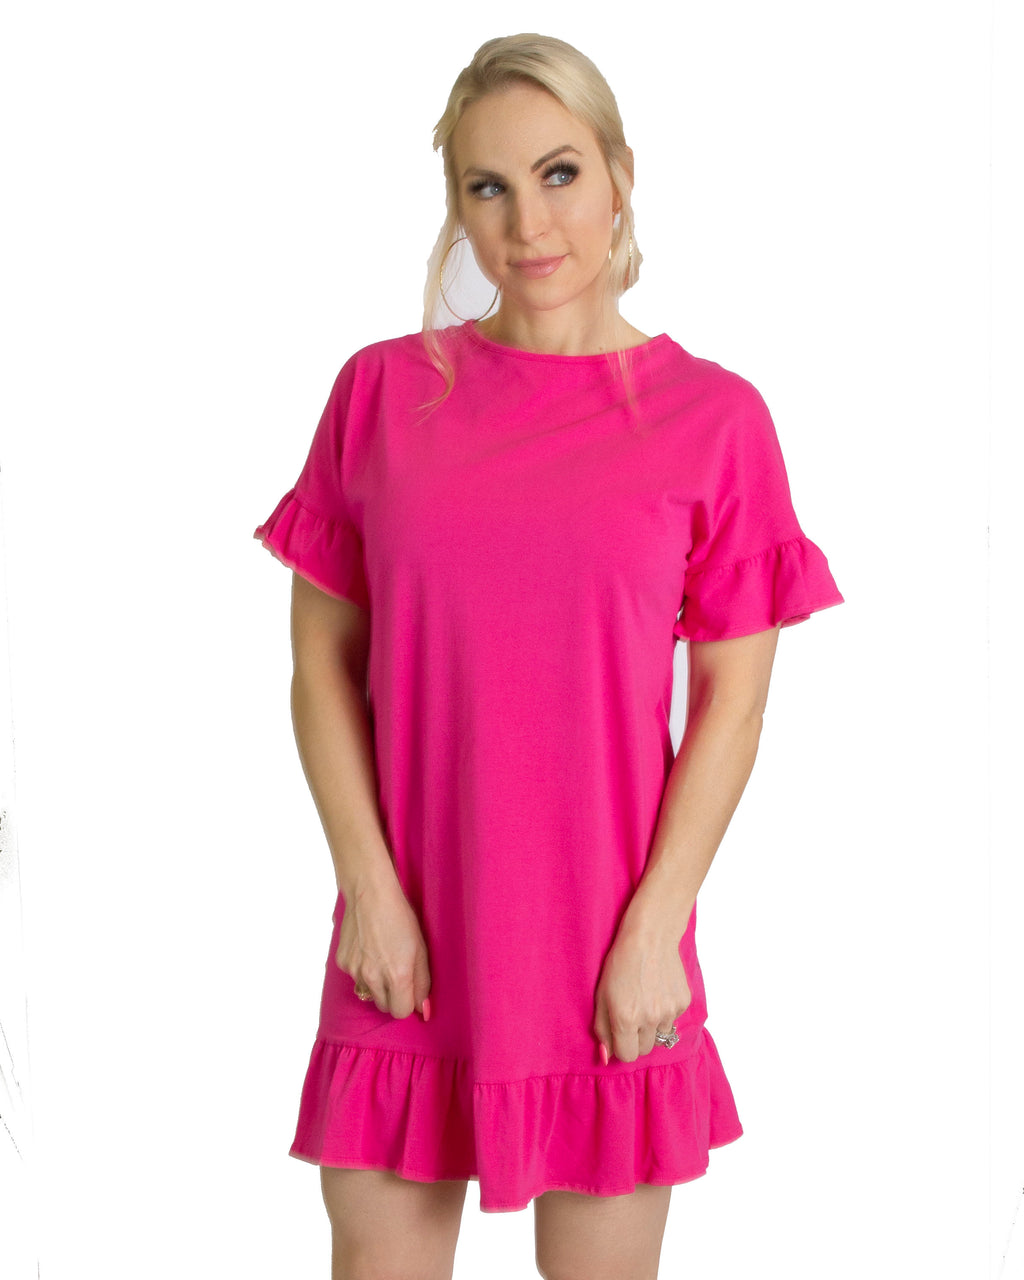 Bright pink t-shirt dress